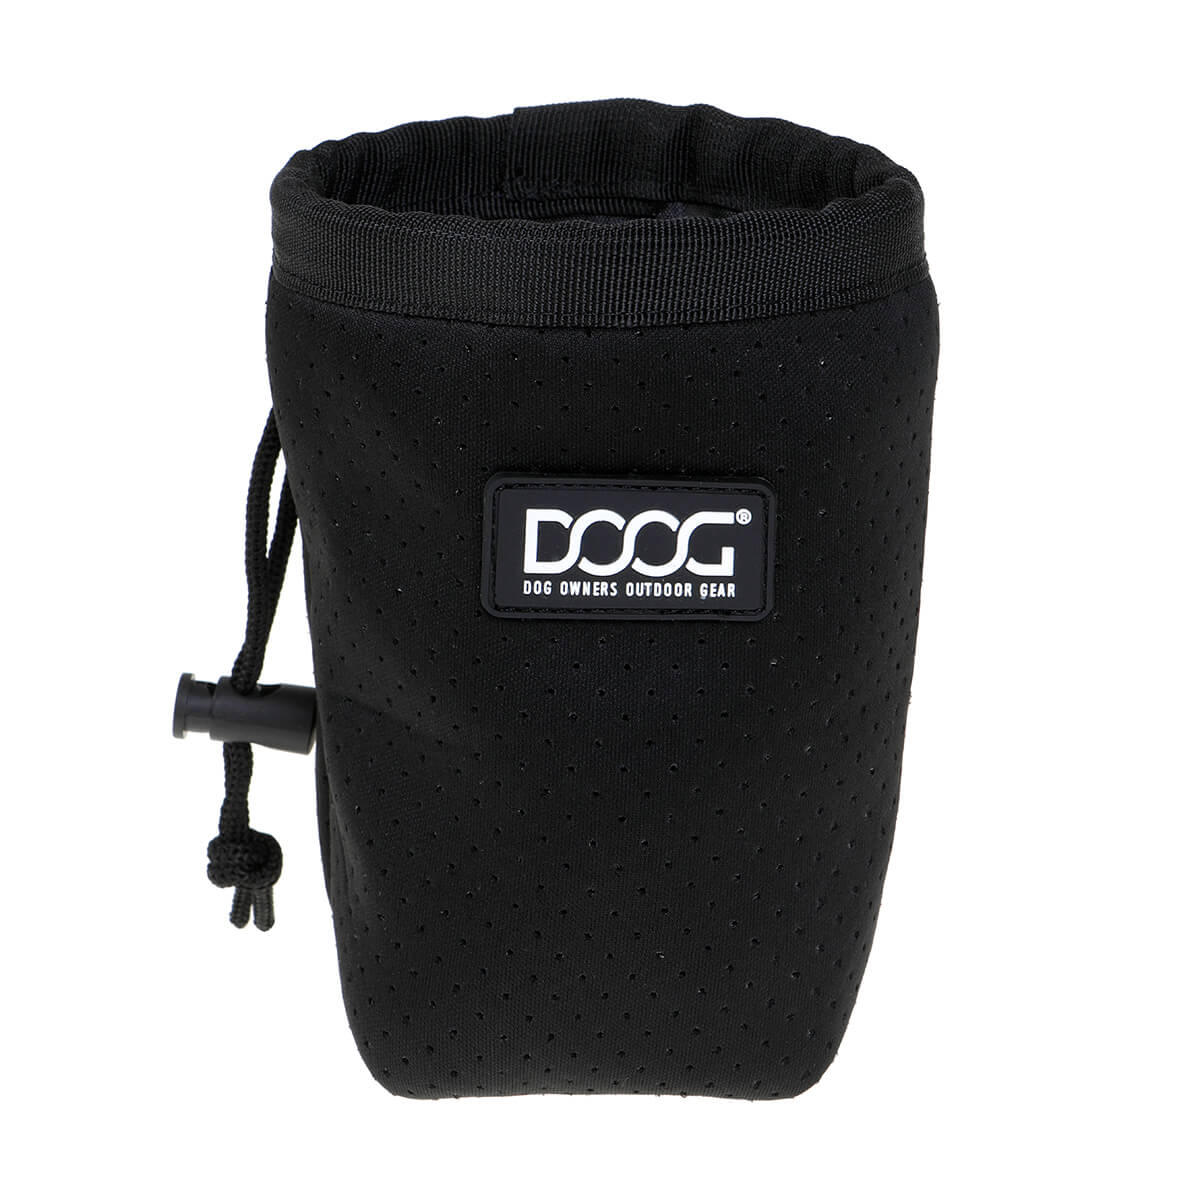 DOOG Neosport Dog Treat & Training Pouch